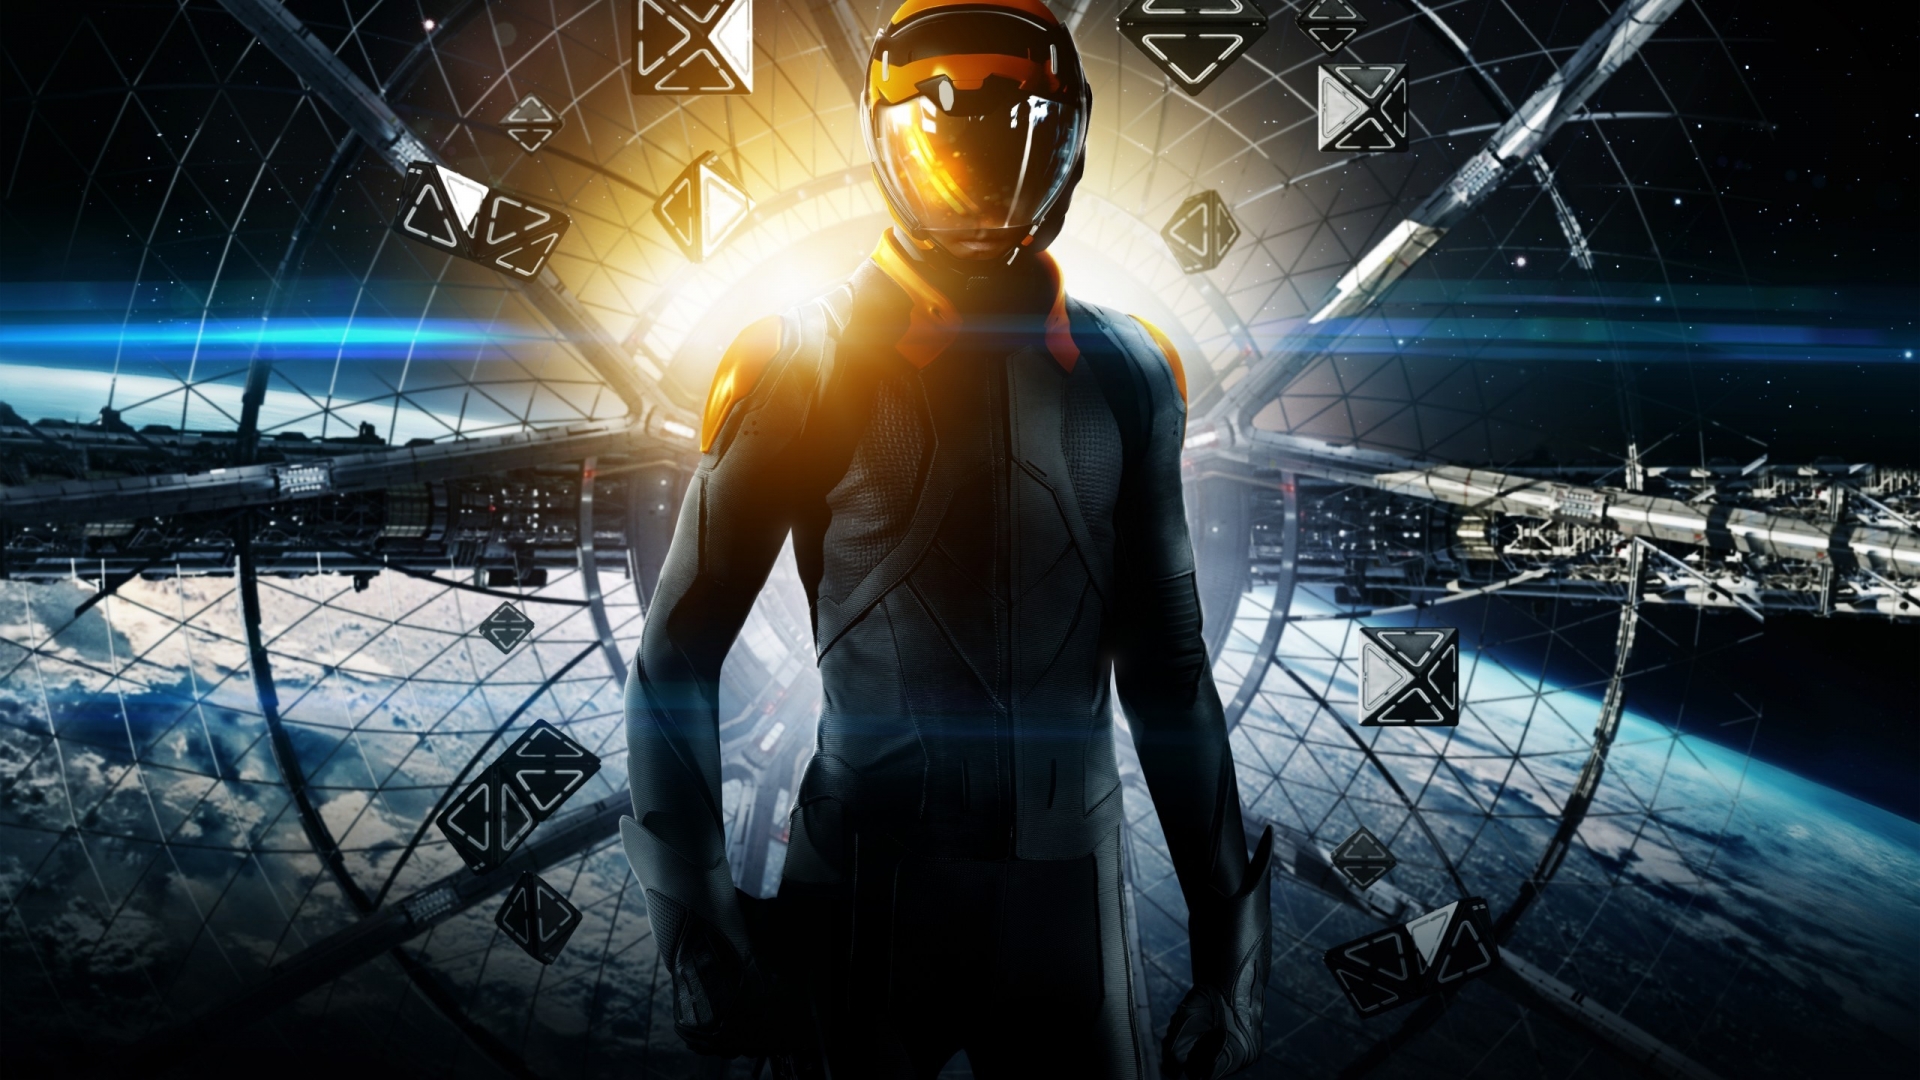 Ender's Game Poster for 1920 x 1080 HDTV 1080p resolution